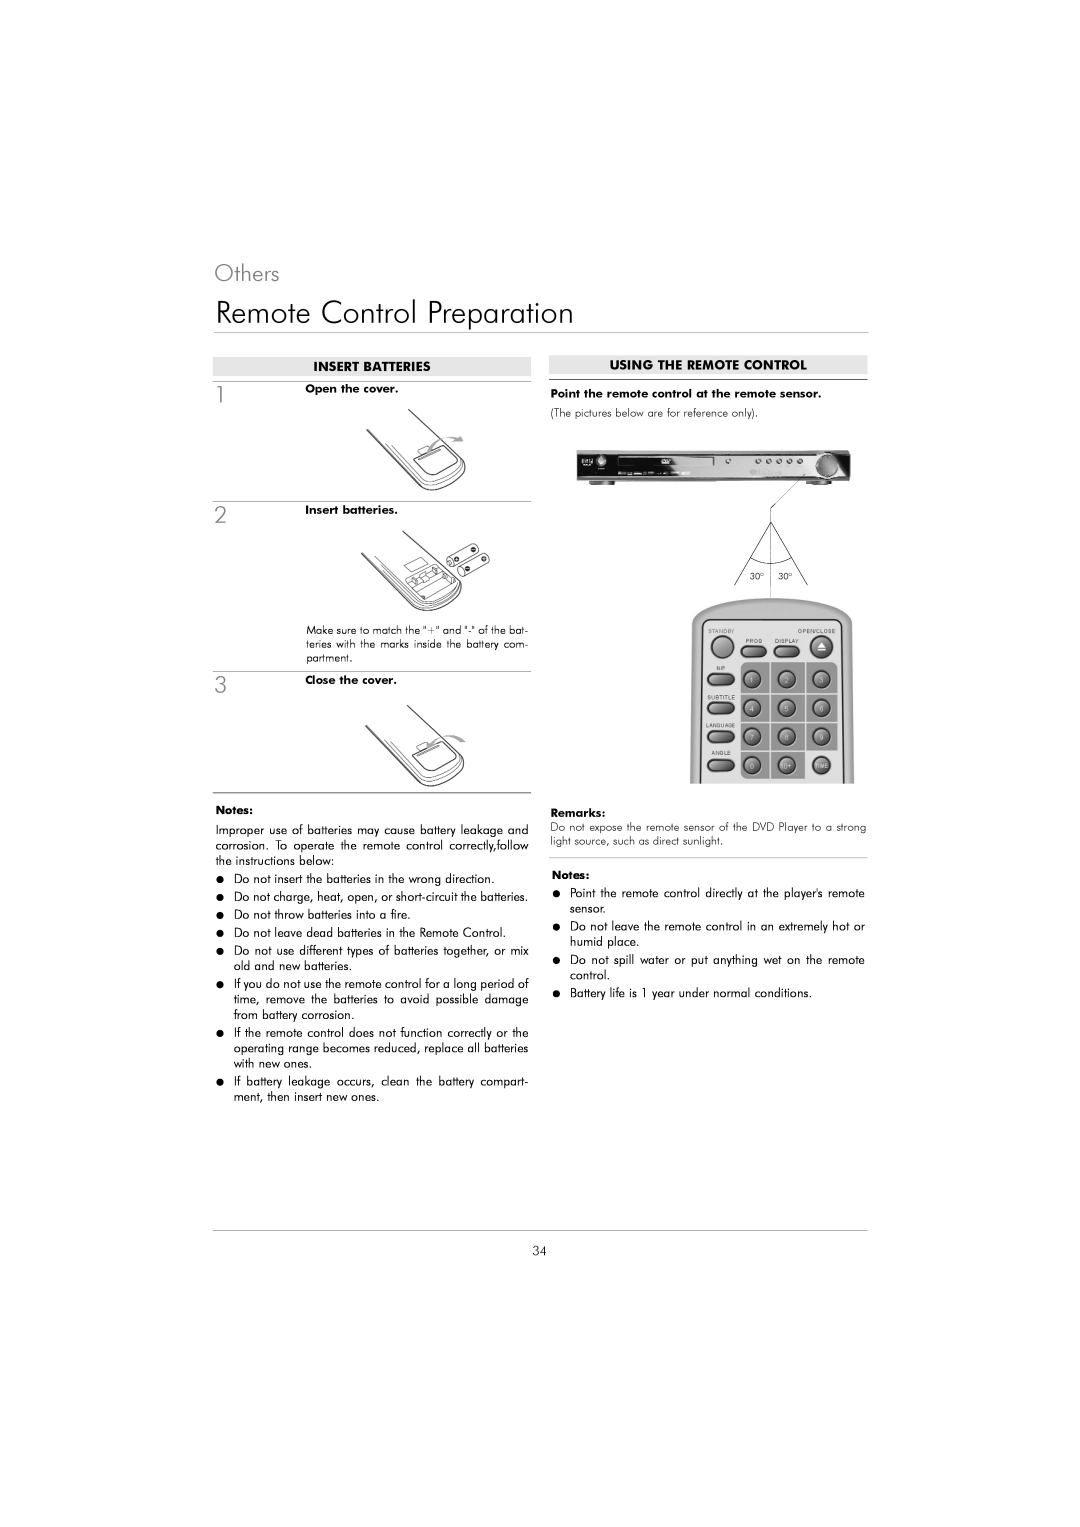 Kodak DVD 40 user manual Remote Control Preparation, Insert Batteriesusing The Remote Control, Others 